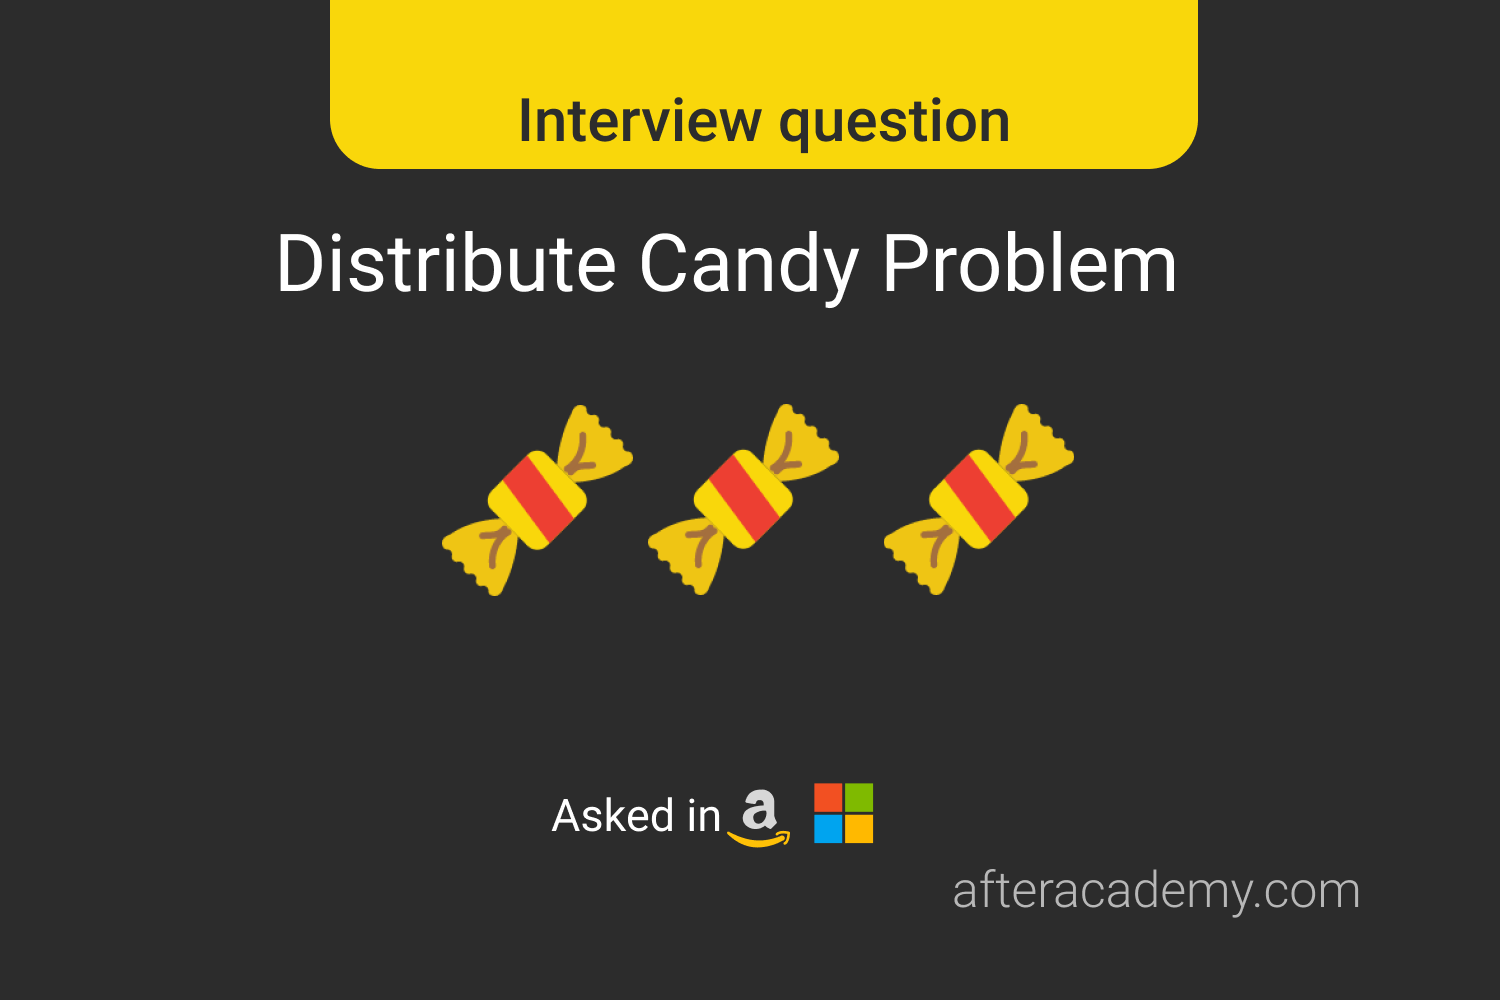 Distribute Candy Problem